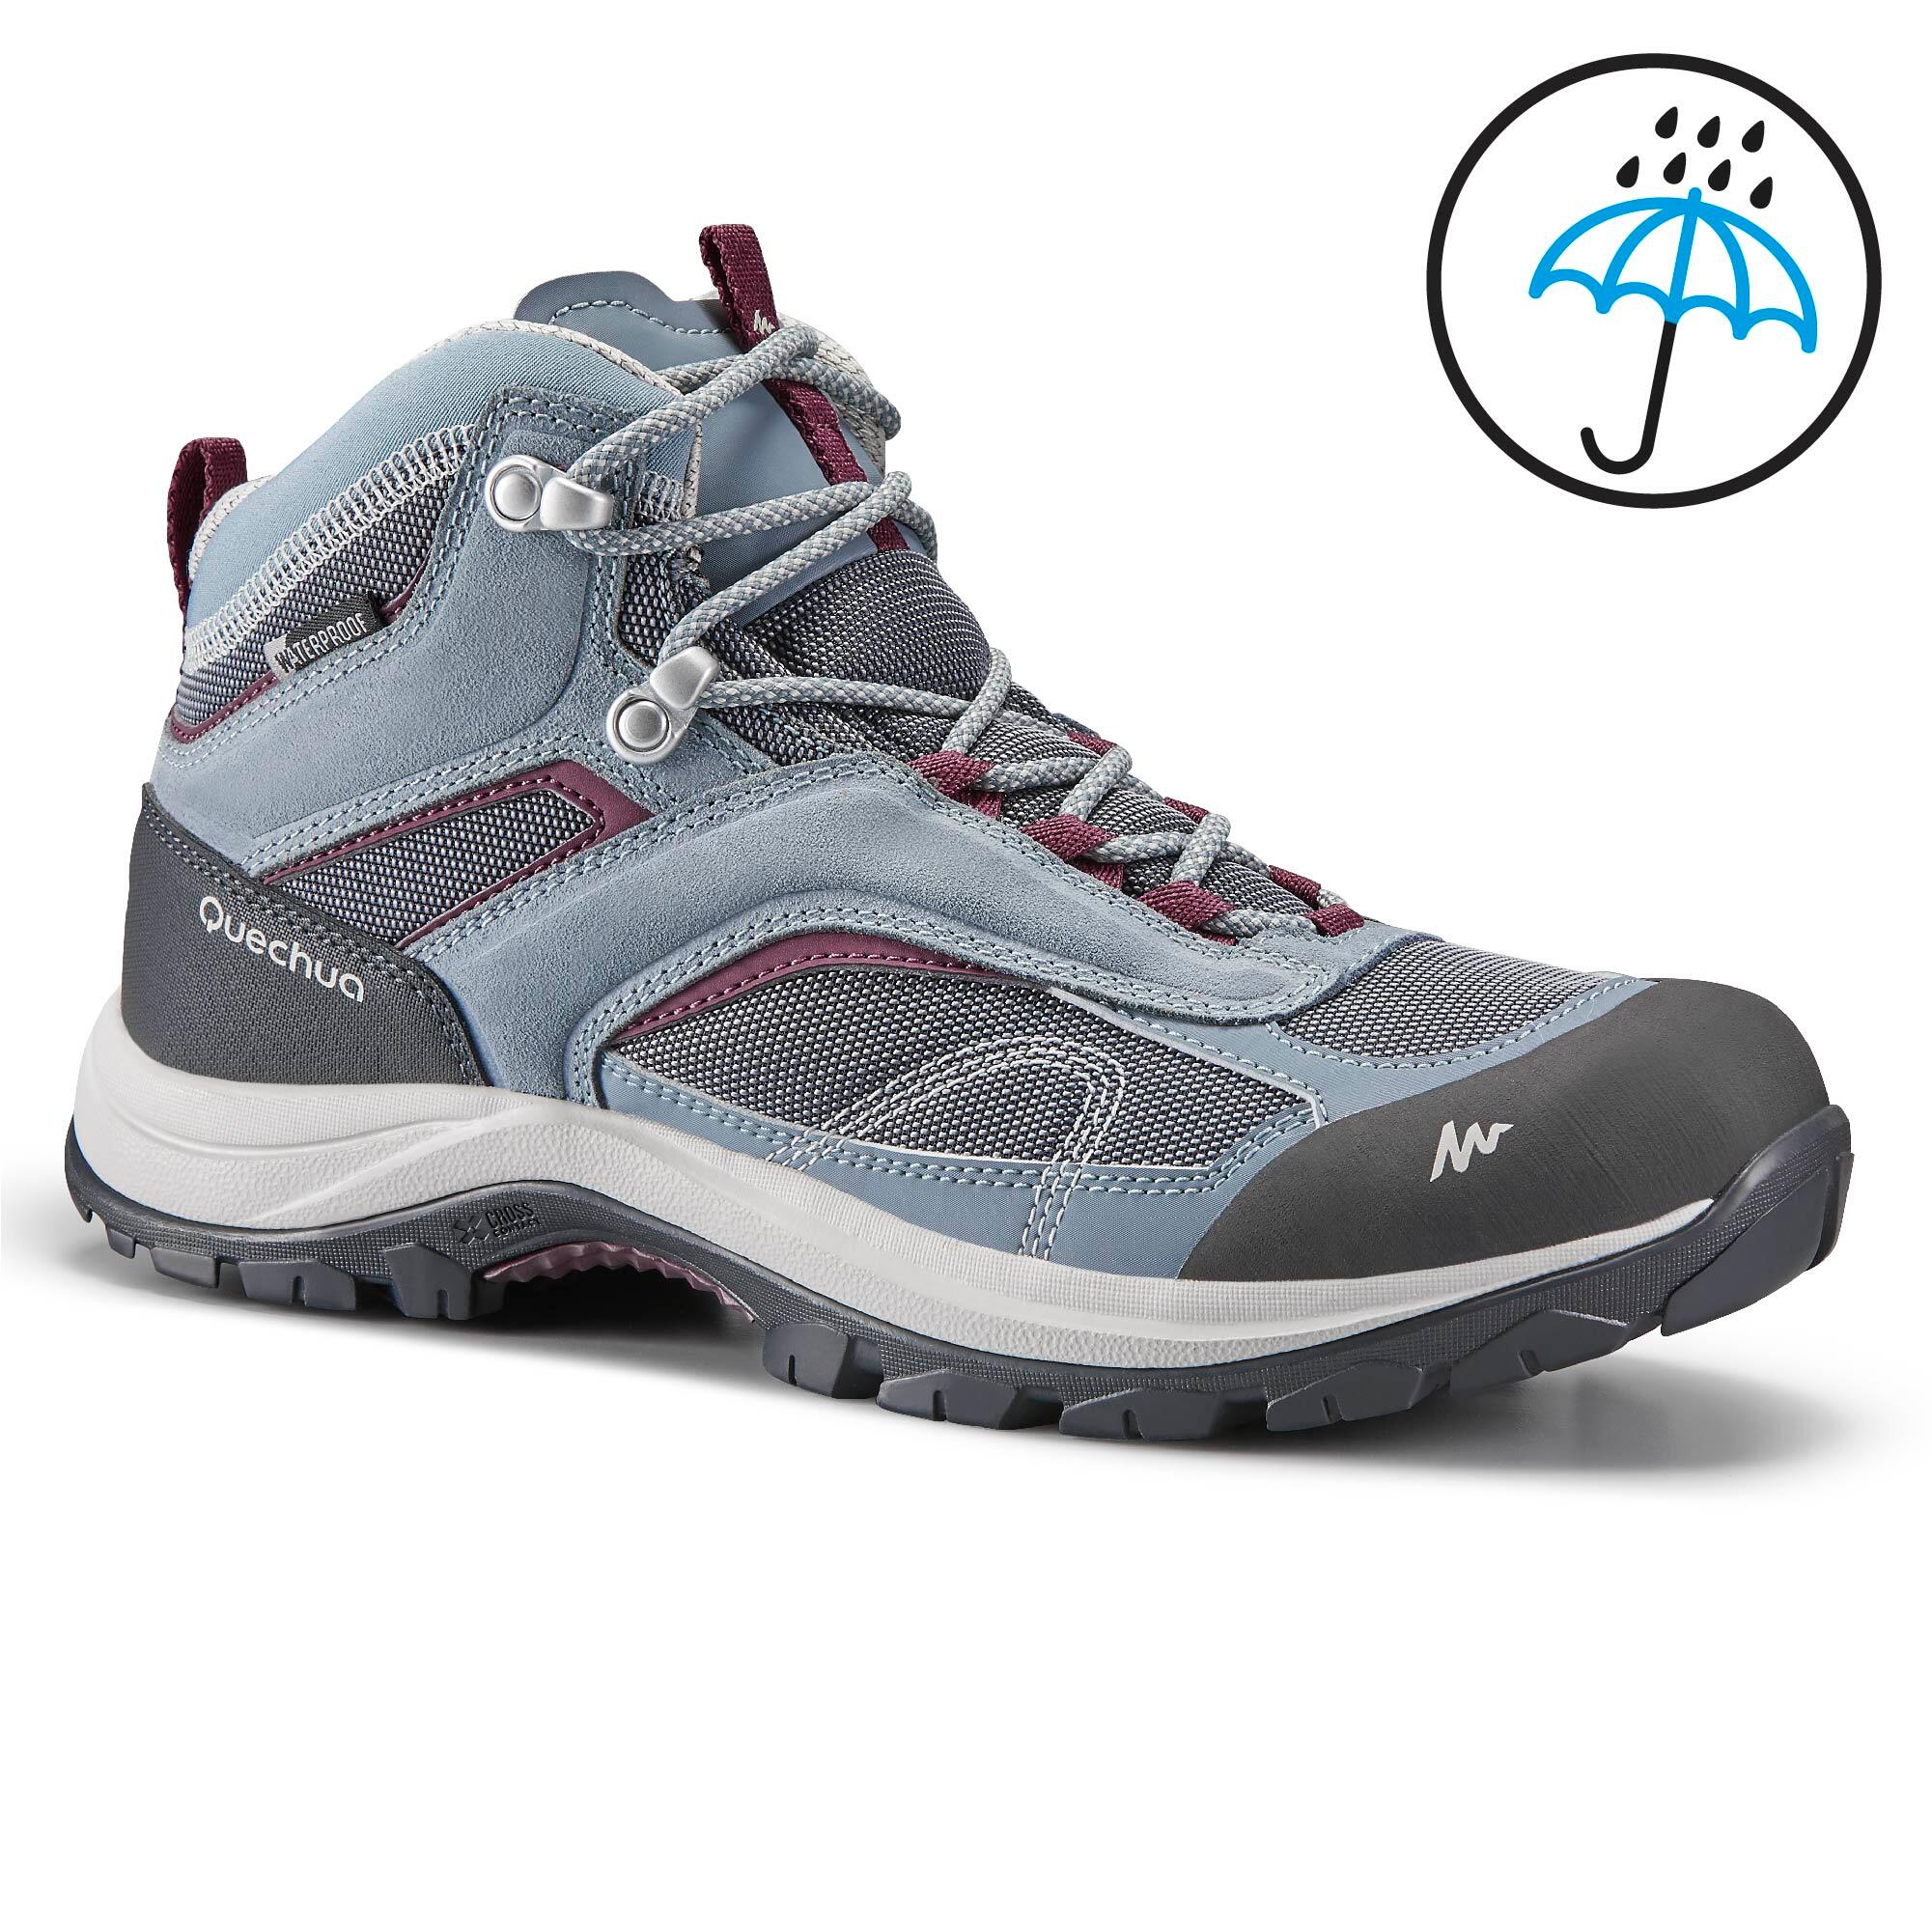 rainy trekking shoes